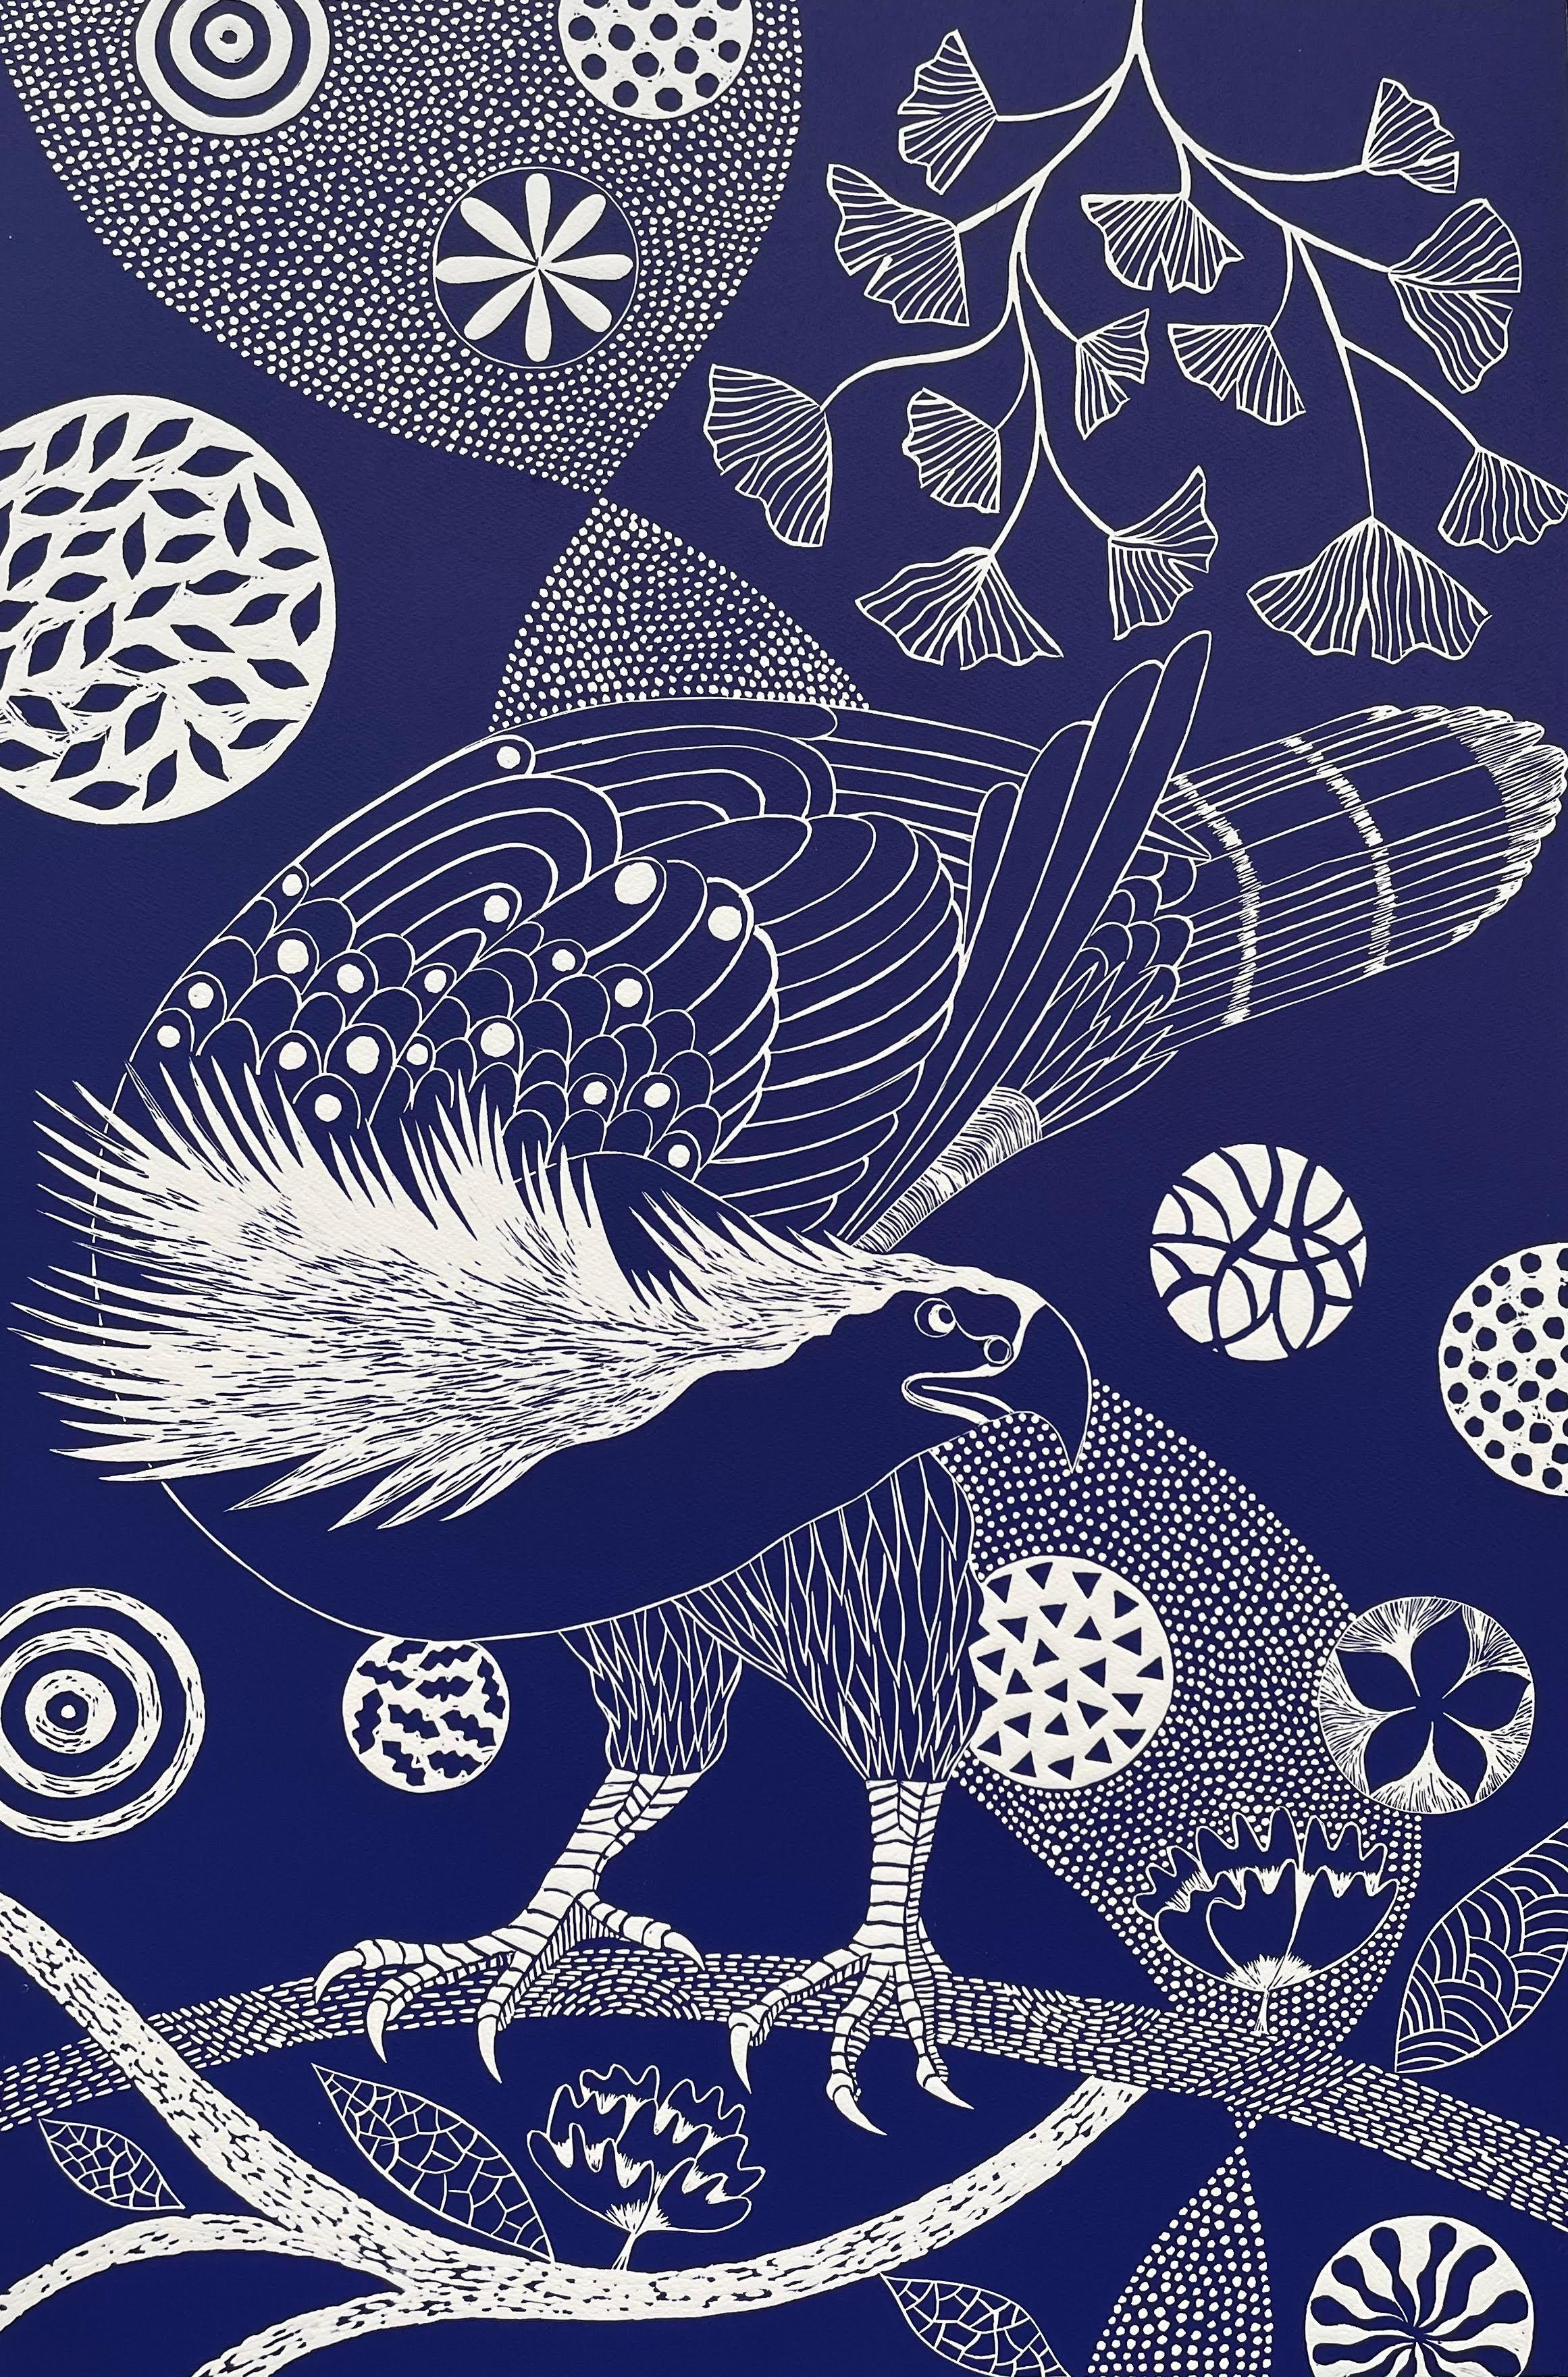 „Reigning and Roosting“   Volkskunst inspirierter Linoleum-Block-Vogeldruck, tiefblau, Volkskunst